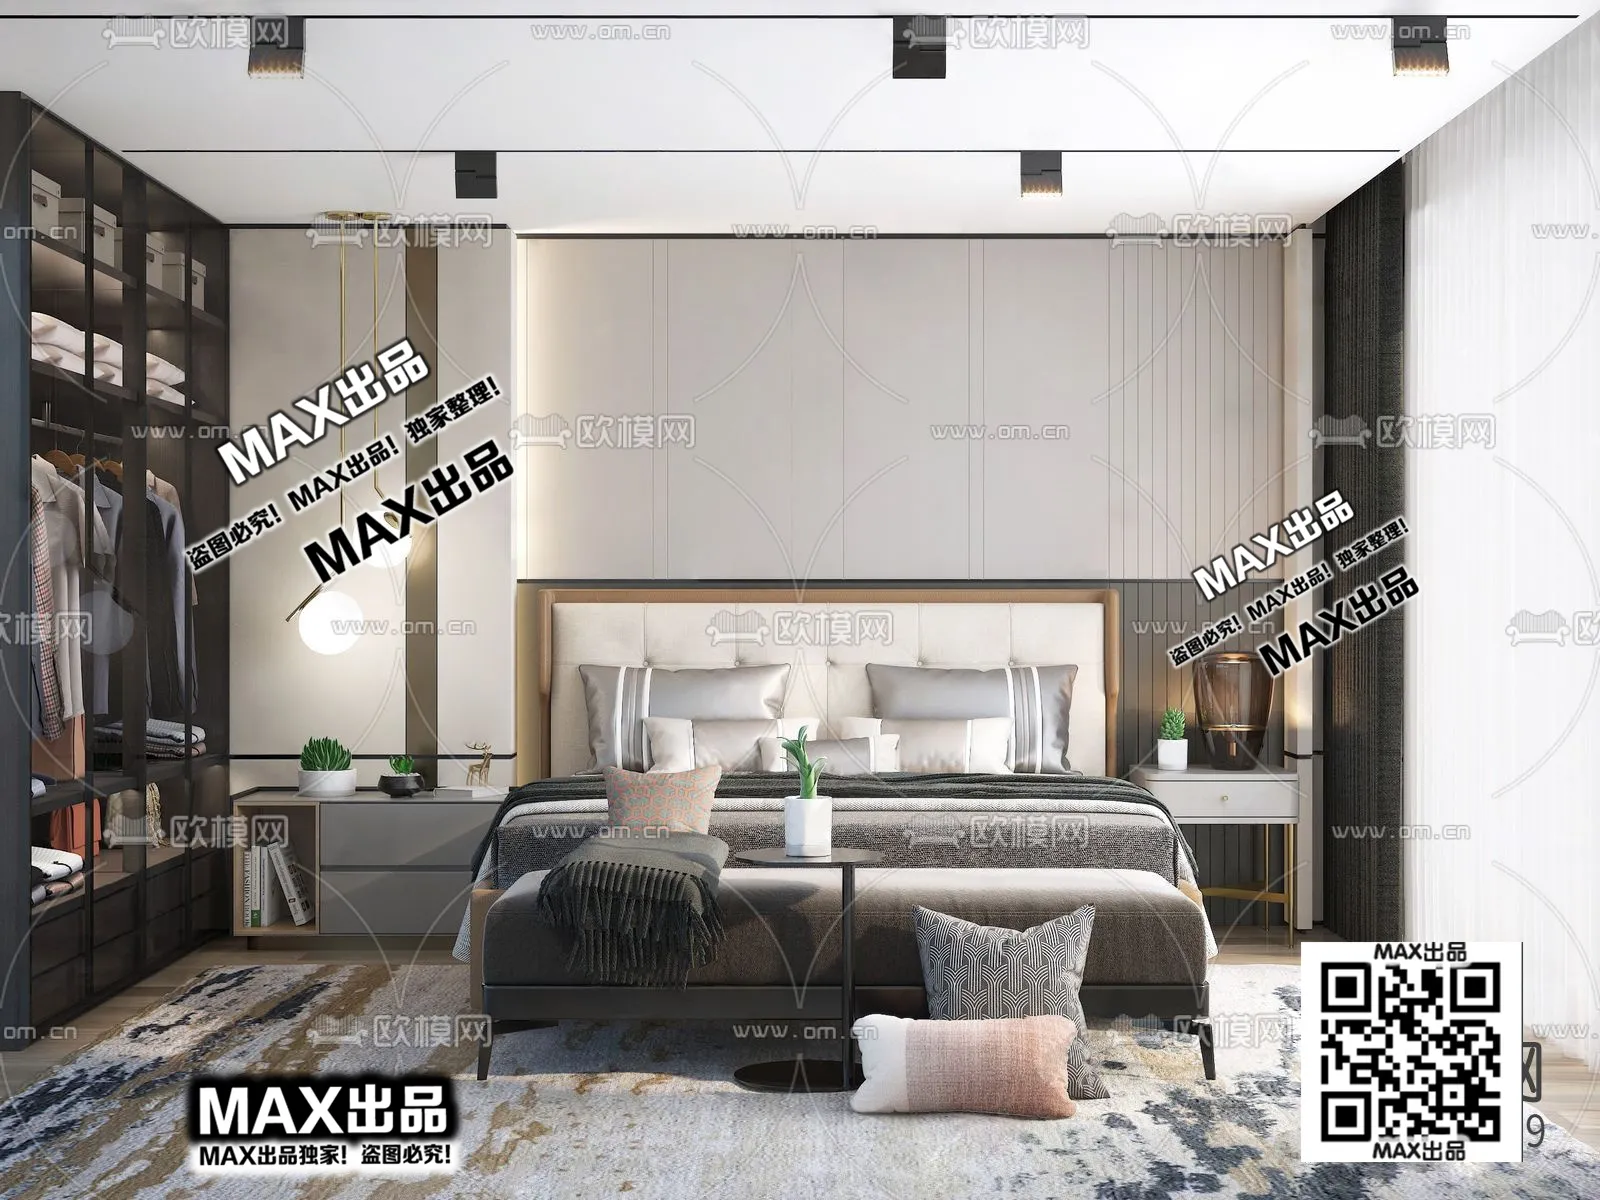 3DS MAX SCENES – LIVING ROOM – 054